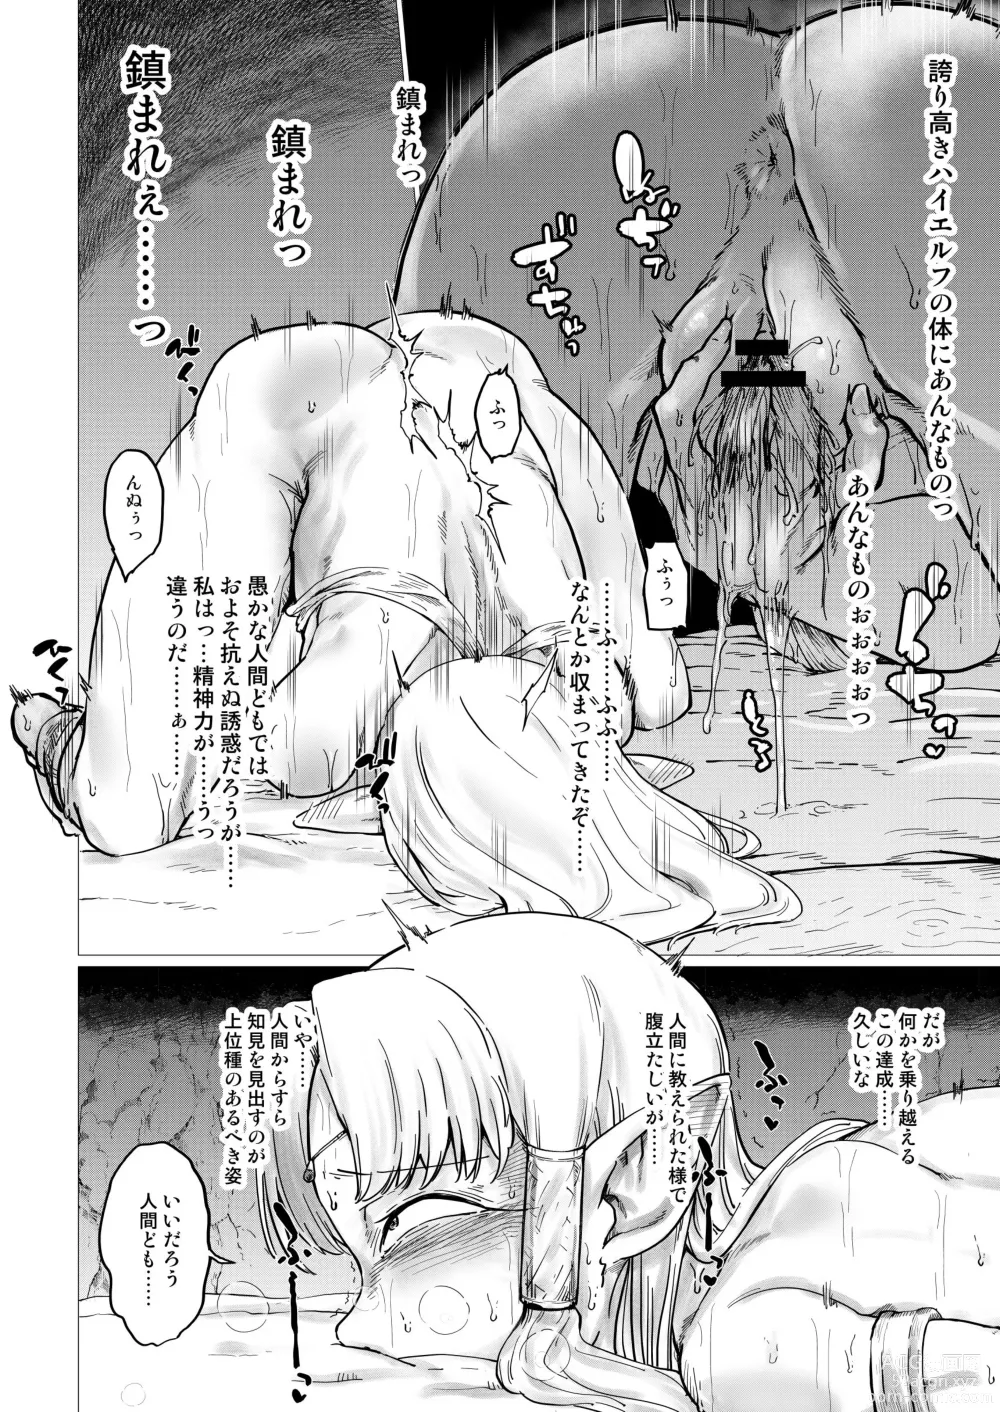 Page 13 of doujinshi Shikorufu